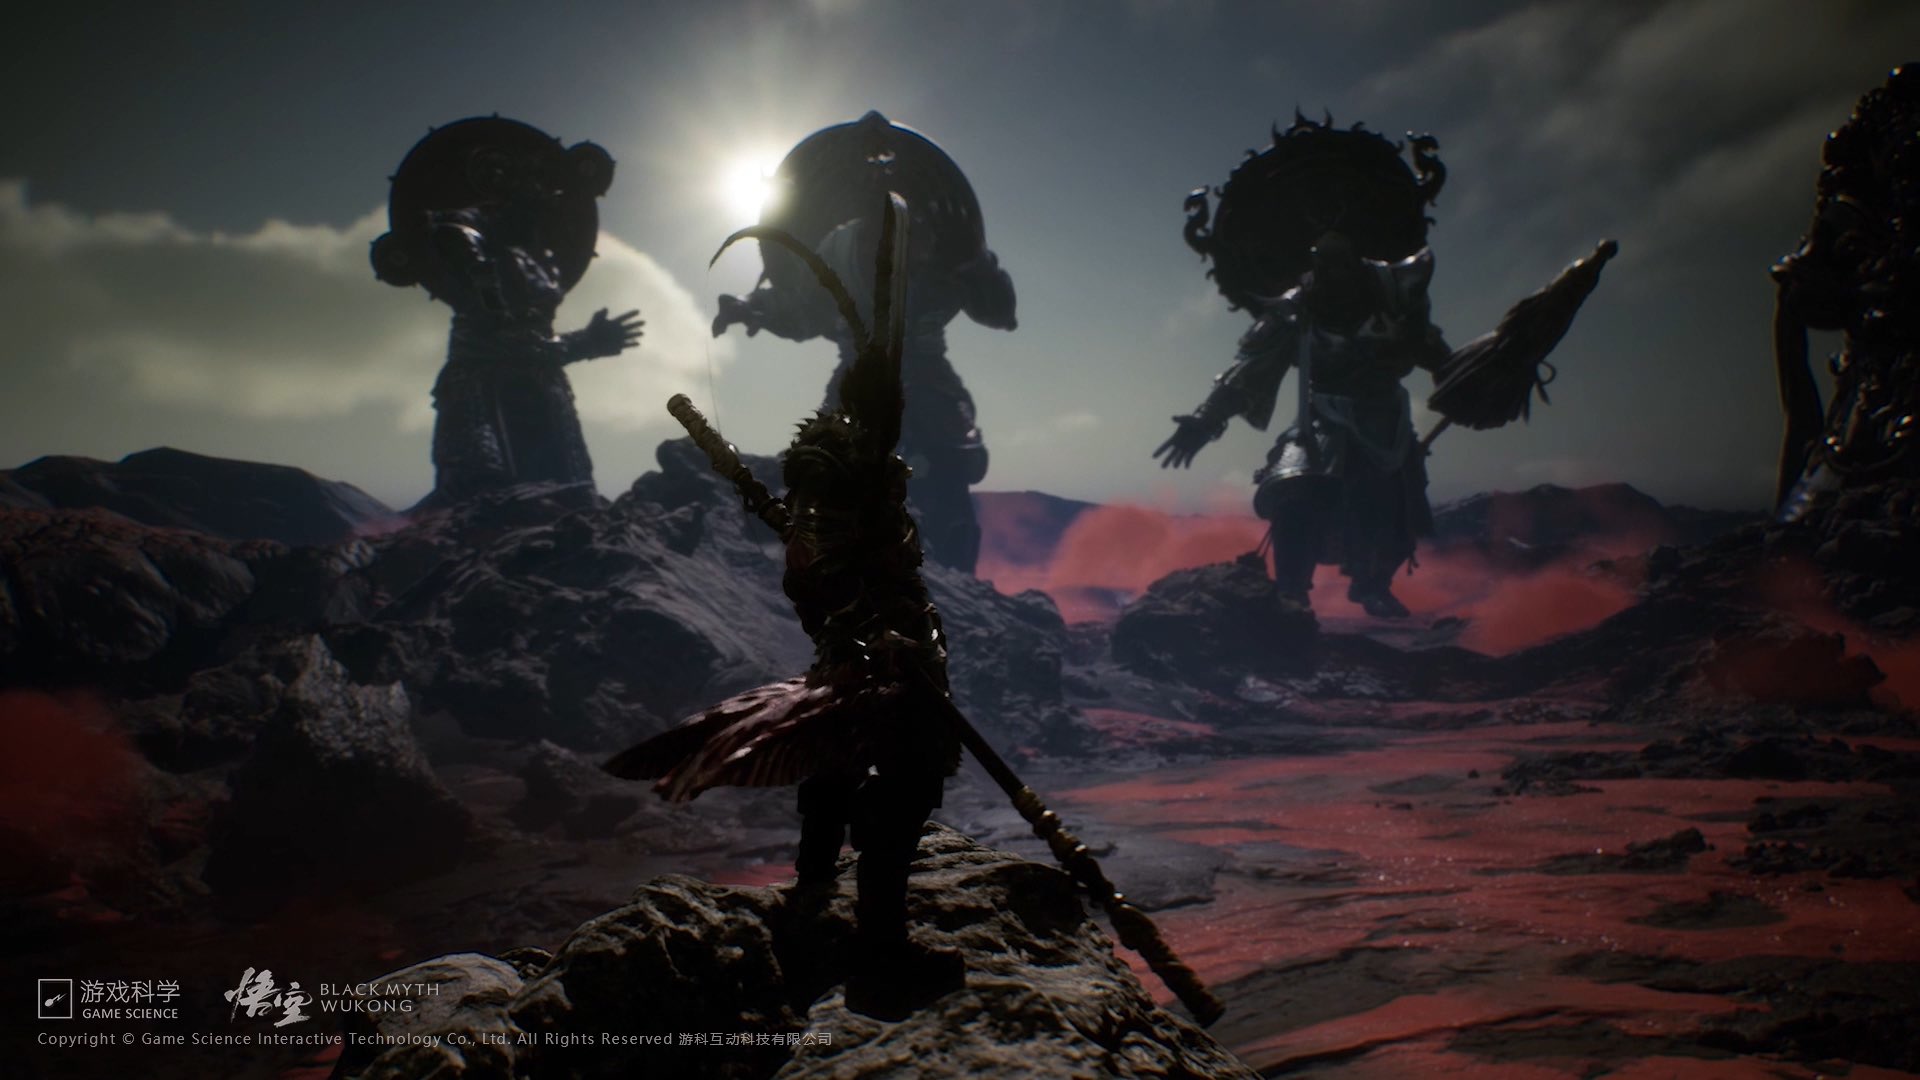 Screenshot from Black Myth: Wukong showing a desert landscape